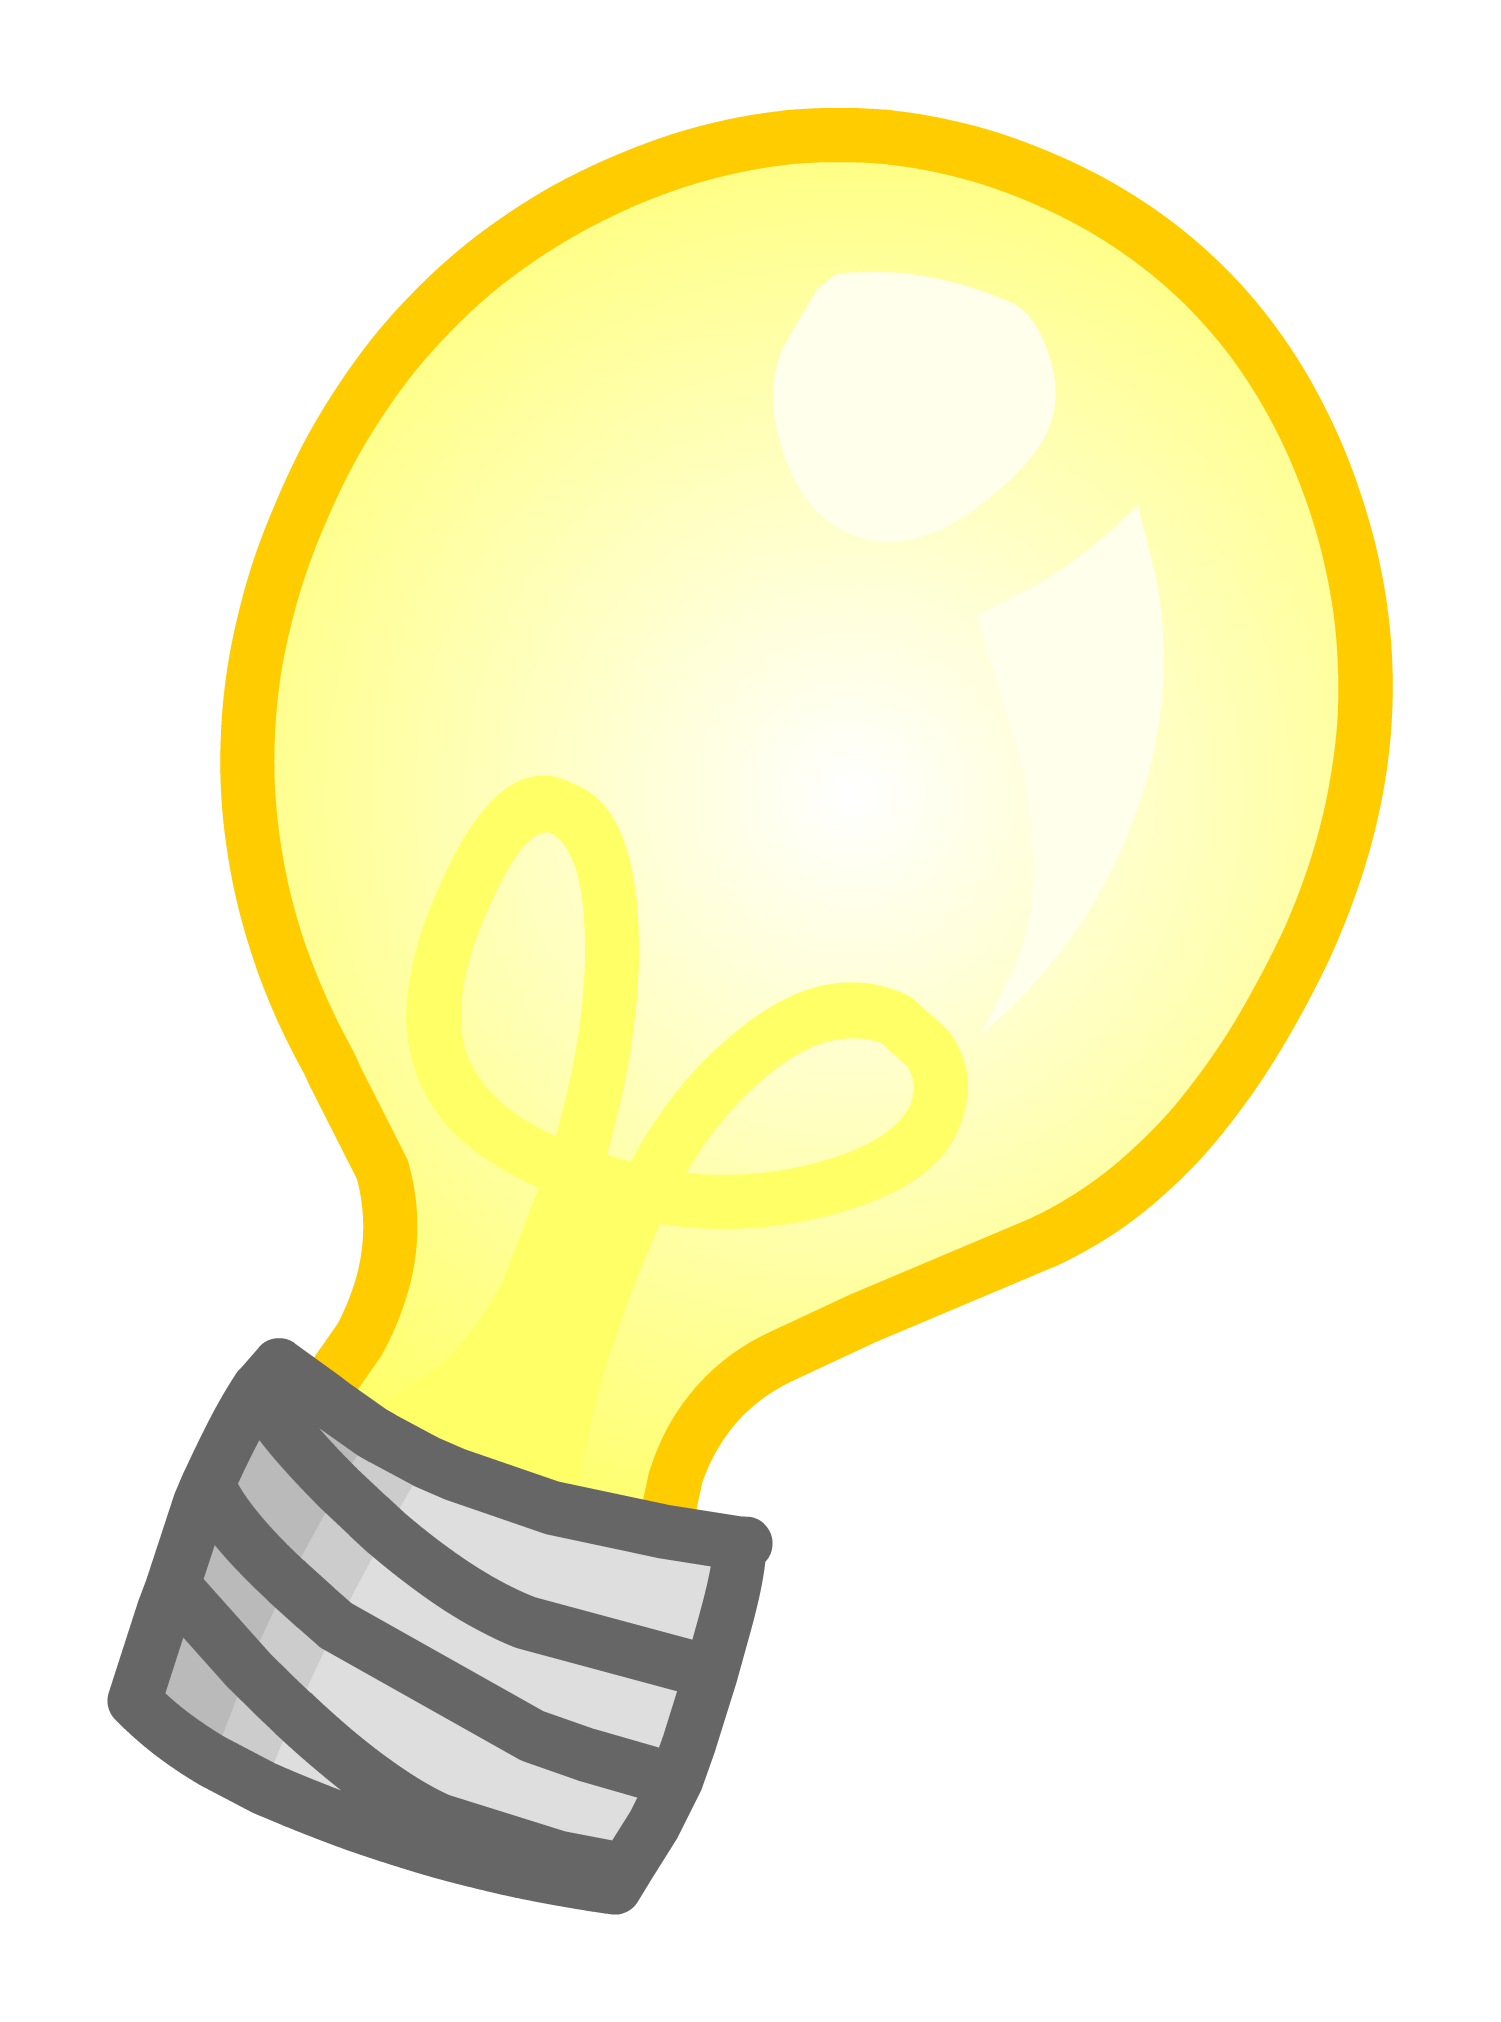 Light Bulb PNG Image